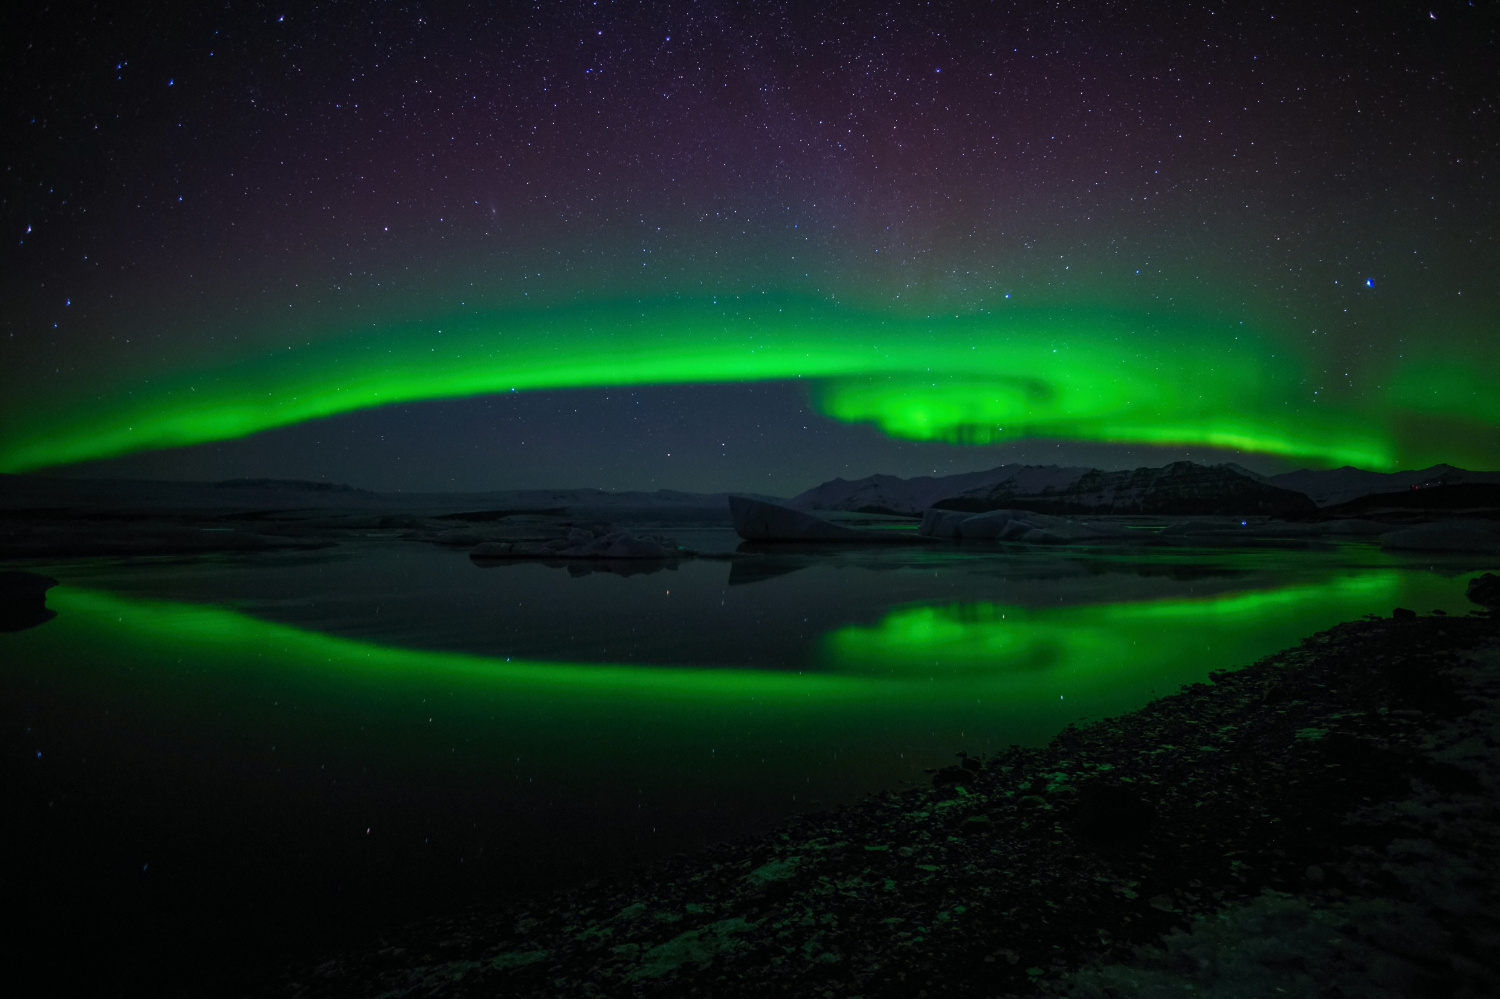 aurora borealis is dancing over the Jokulsarlon